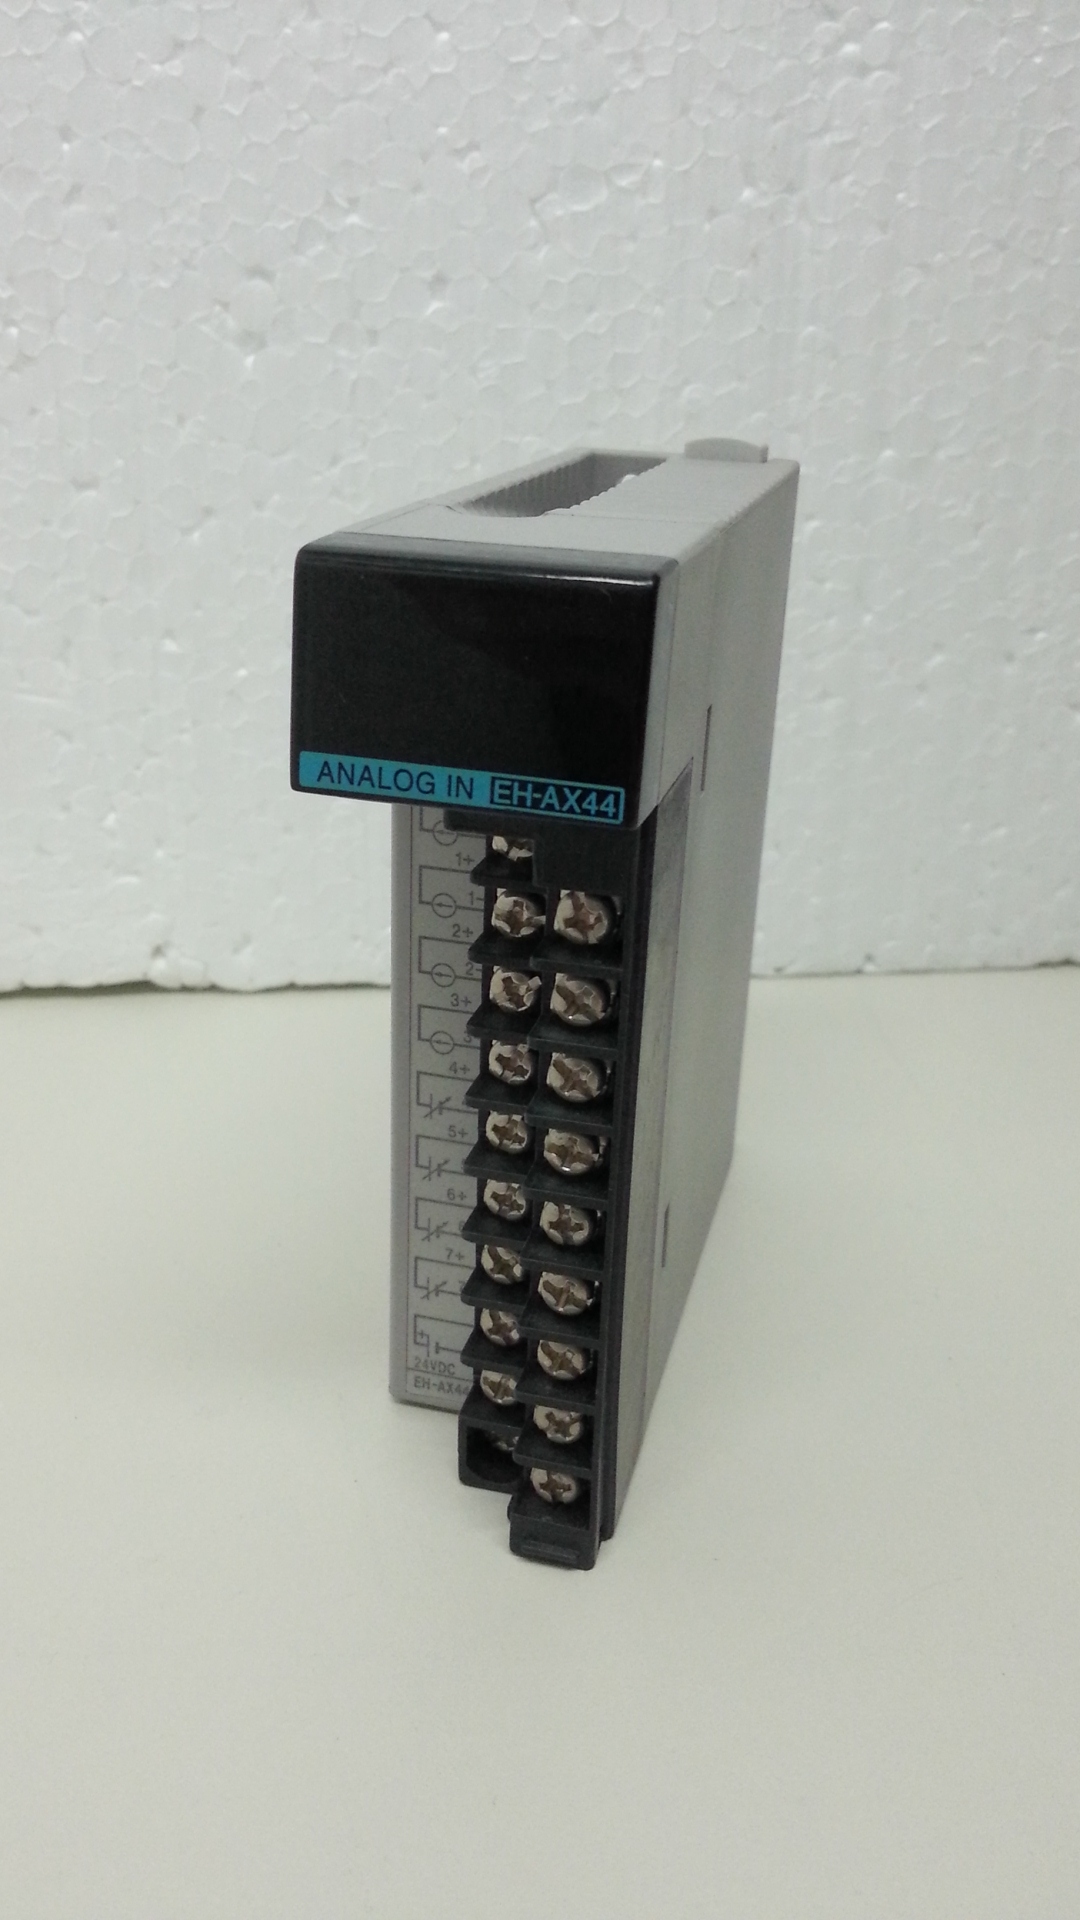 EH-AX44 Analog input card EH150 series hitachi